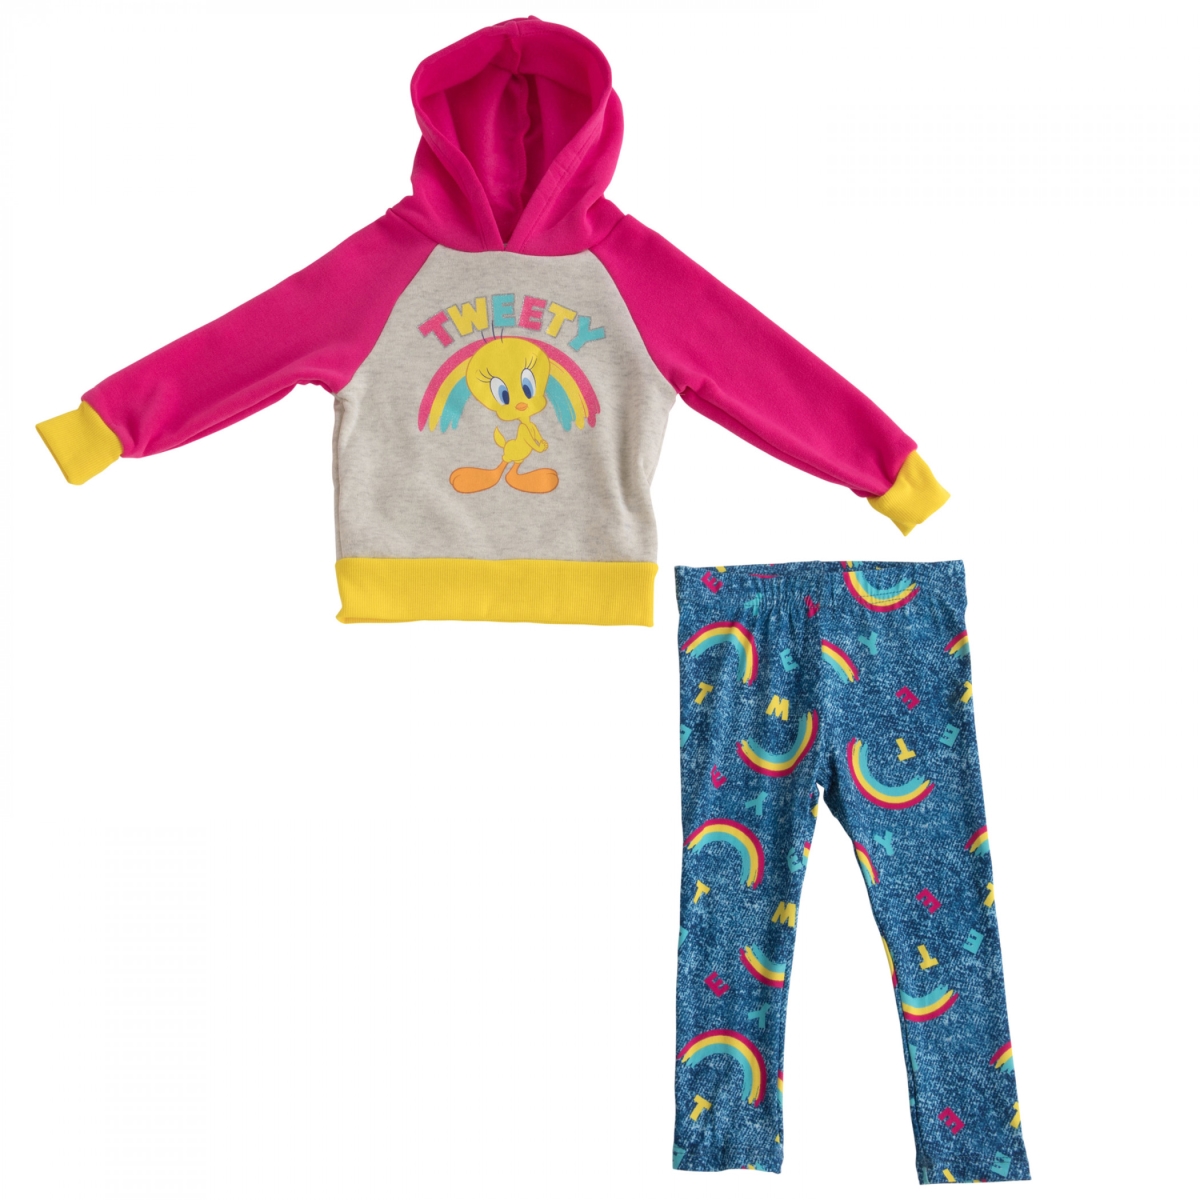 Looney Tunes 850072-toddler4t Looney Tunes Tweety Bird Rainbow Infant Fleece Jacket Set - Toddler 4T - 2 Piece